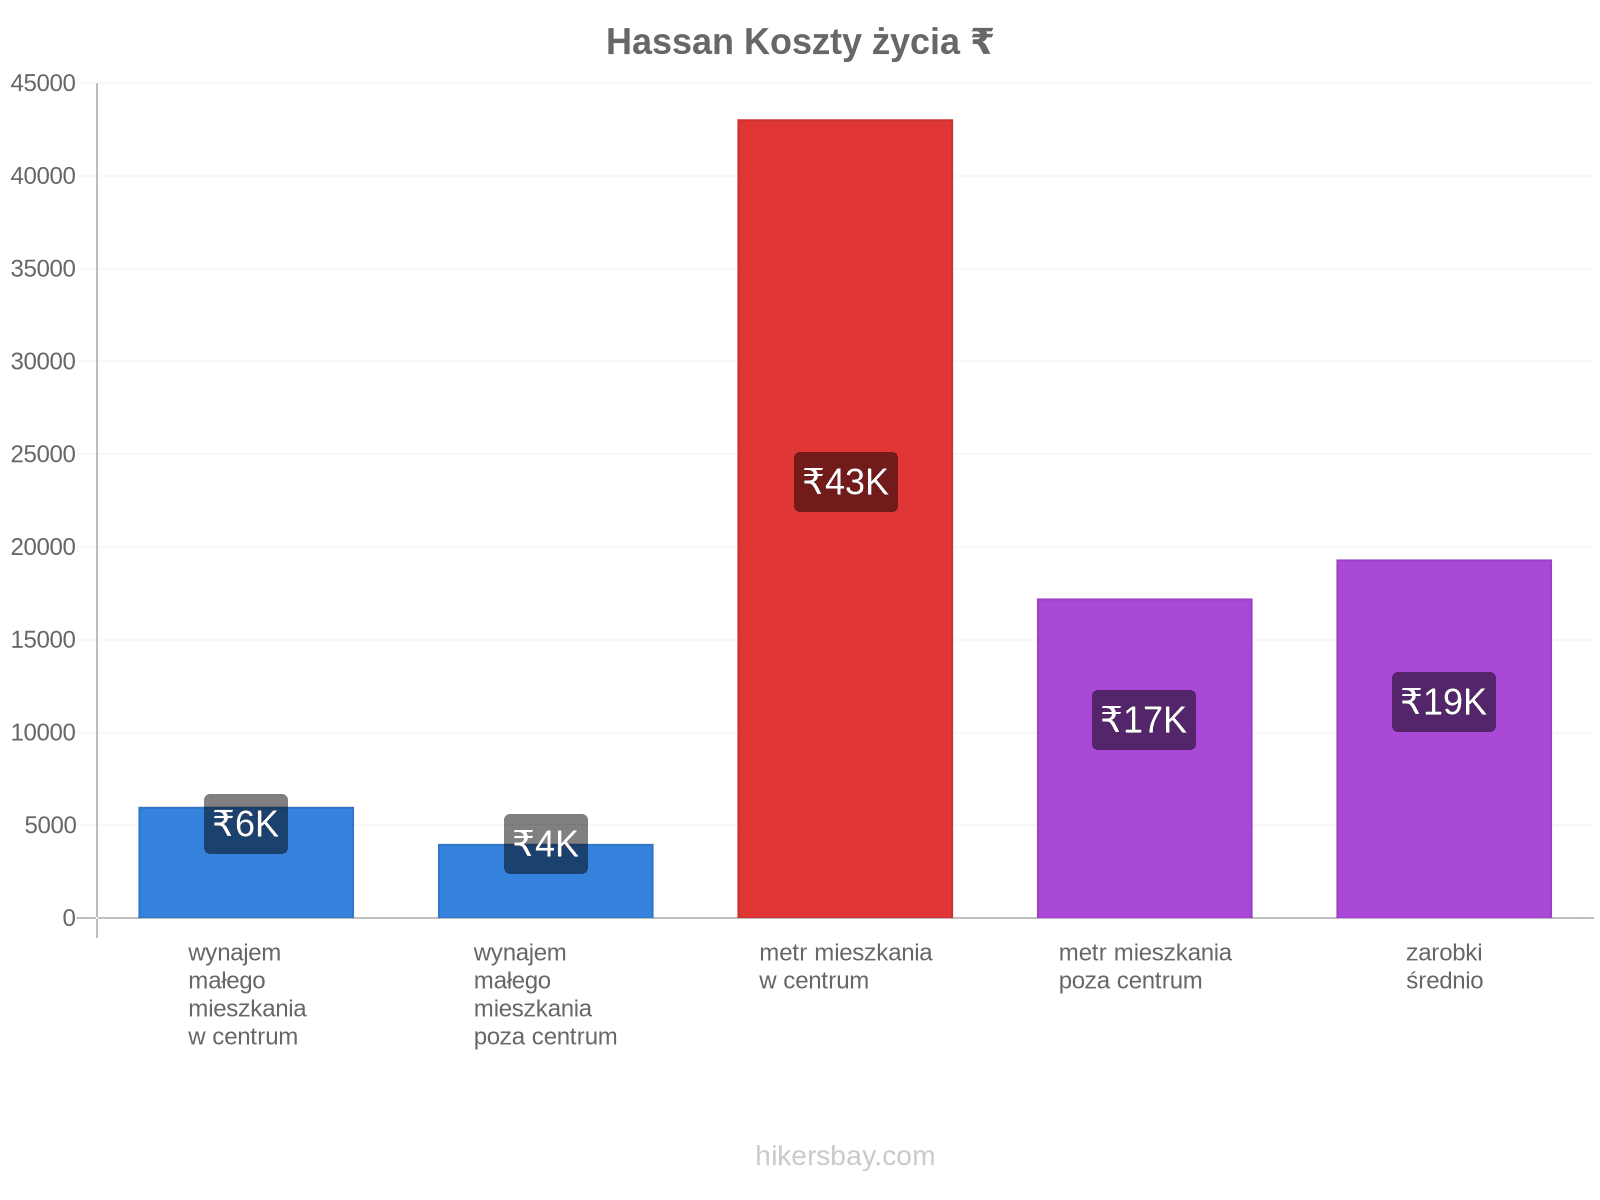 Hassan koszty życia hikersbay.com